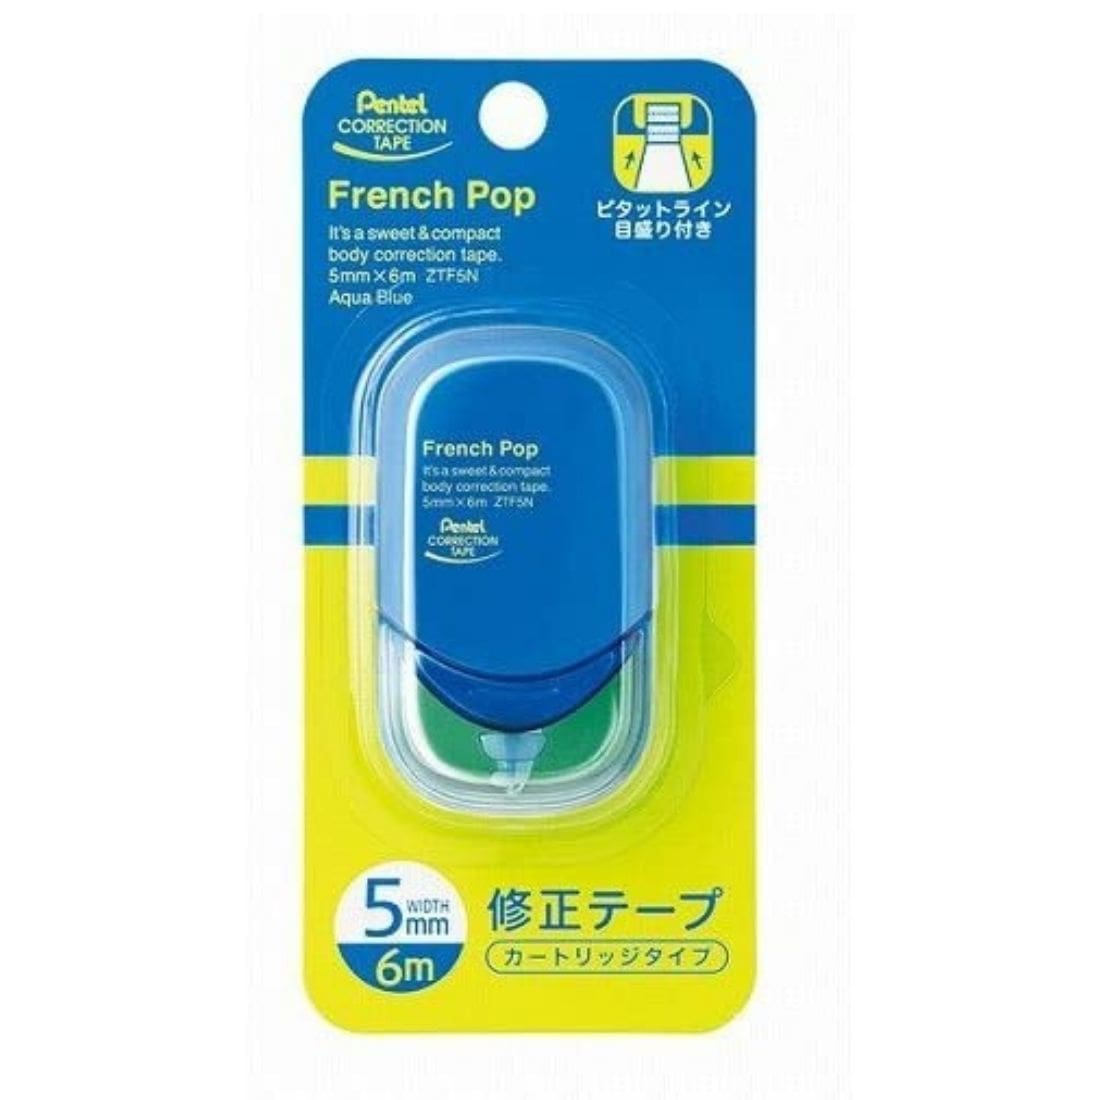 Pentel refillable French Pop Correction Tape Main Unit XZTF5NCW - Paper Kooka